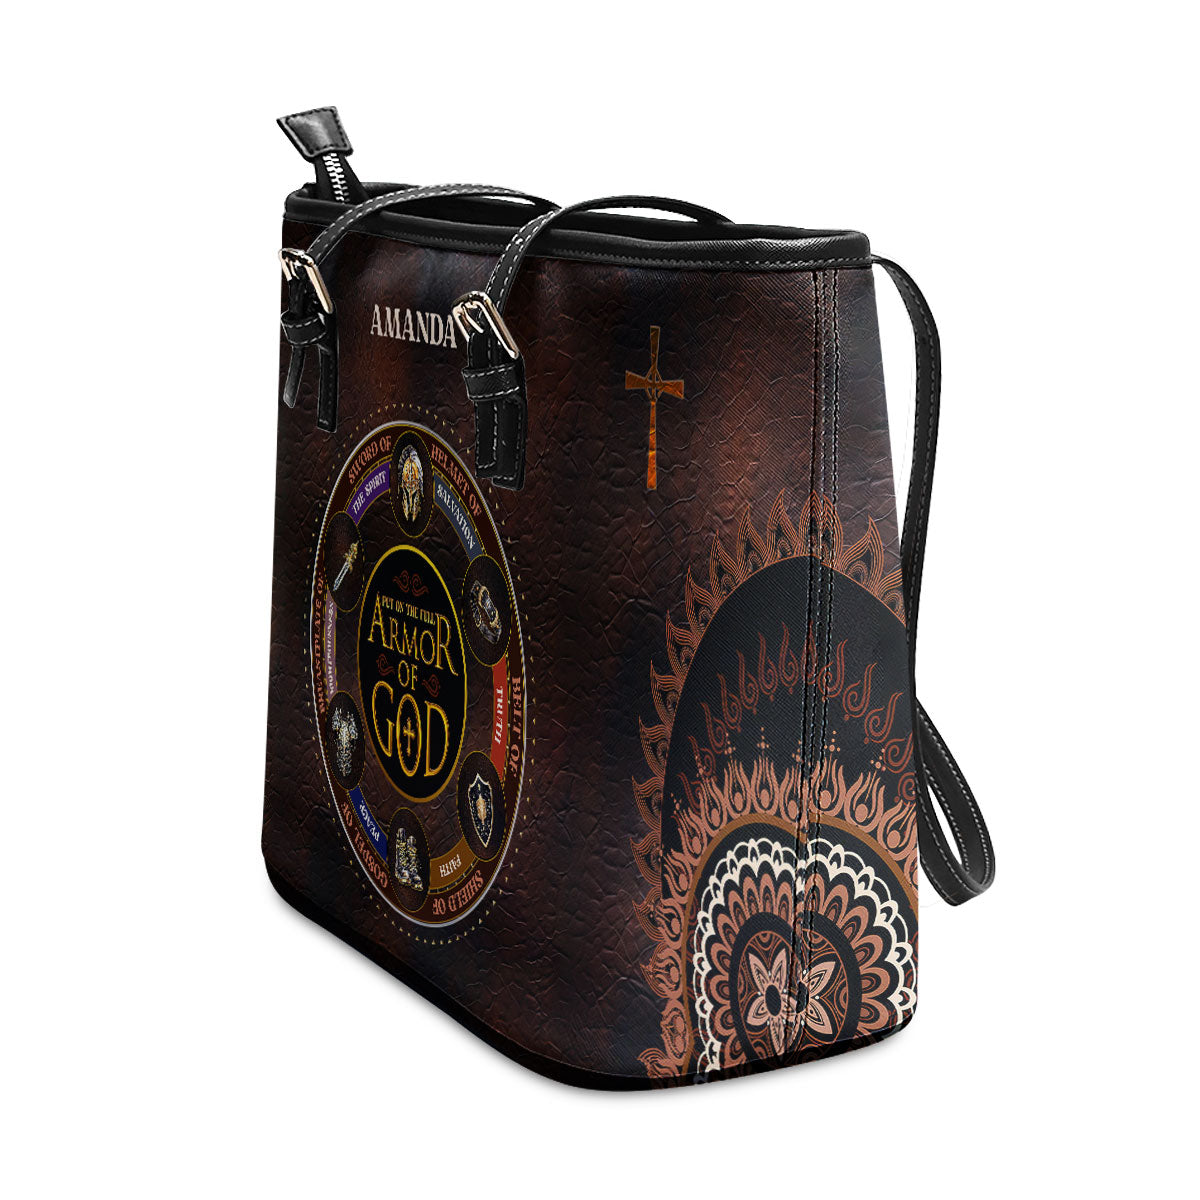 Jesuspirit | Personalized Leather Tote Bag | Armor Of God LLTBM762